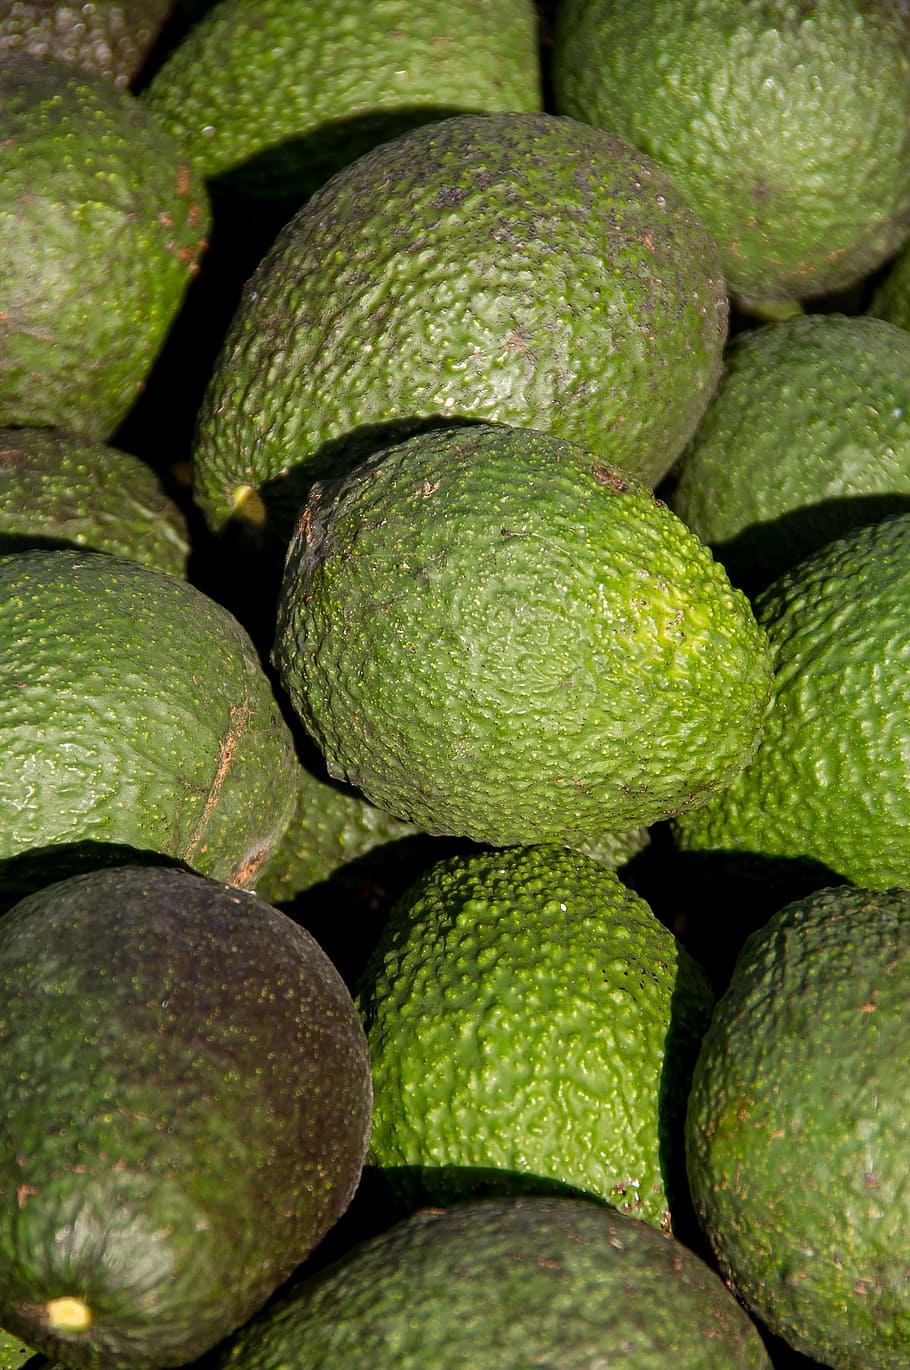 hass avocado, avocados, fruit, food, harvest, green, many, healthy